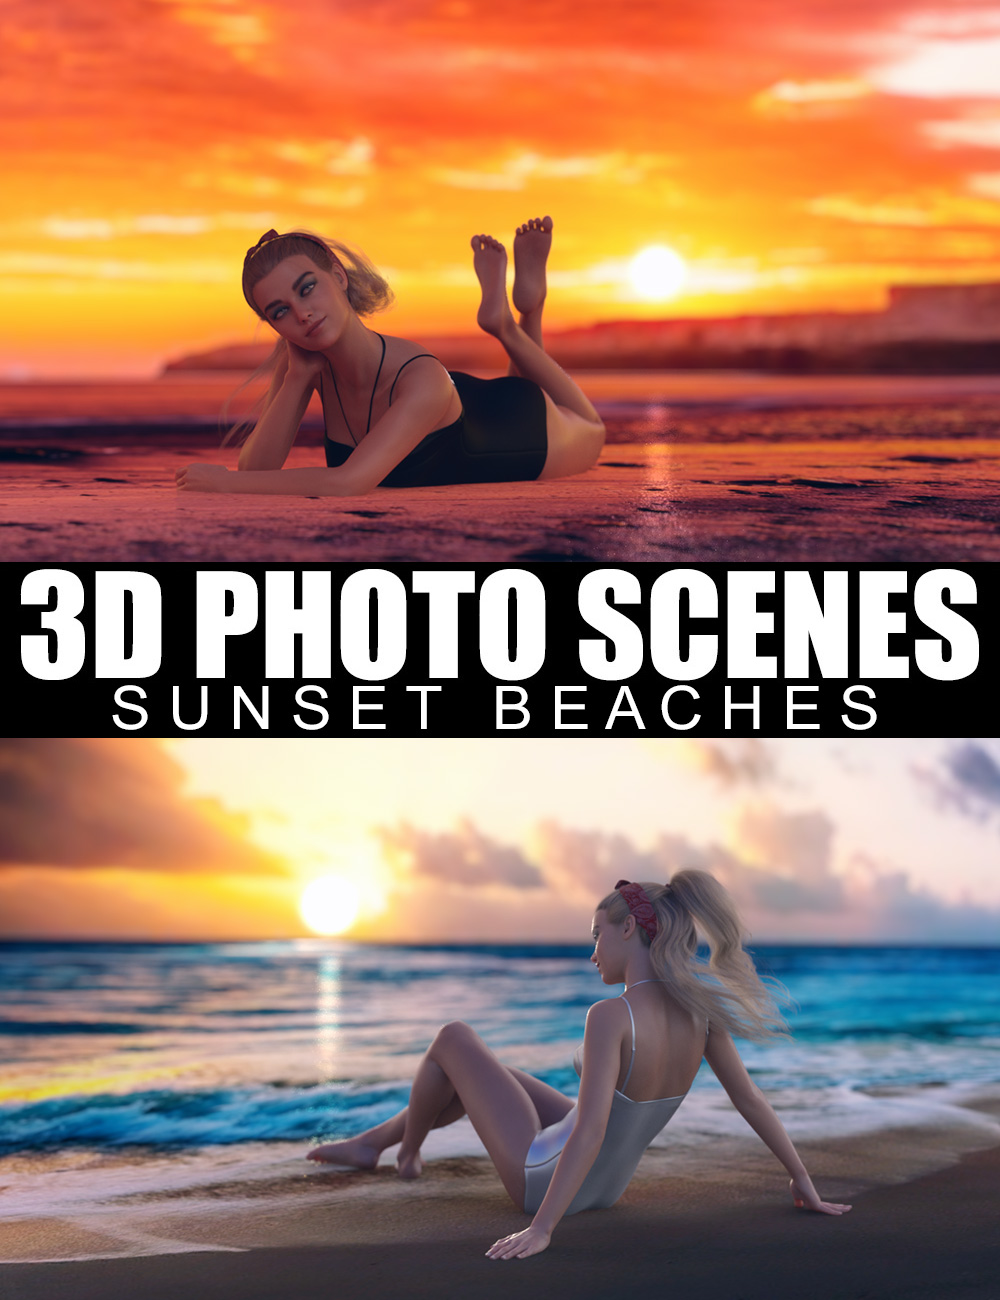 3D Photo Scenes - Sunset Beaches by: Dreamlight, 3D Models by Daz 3D